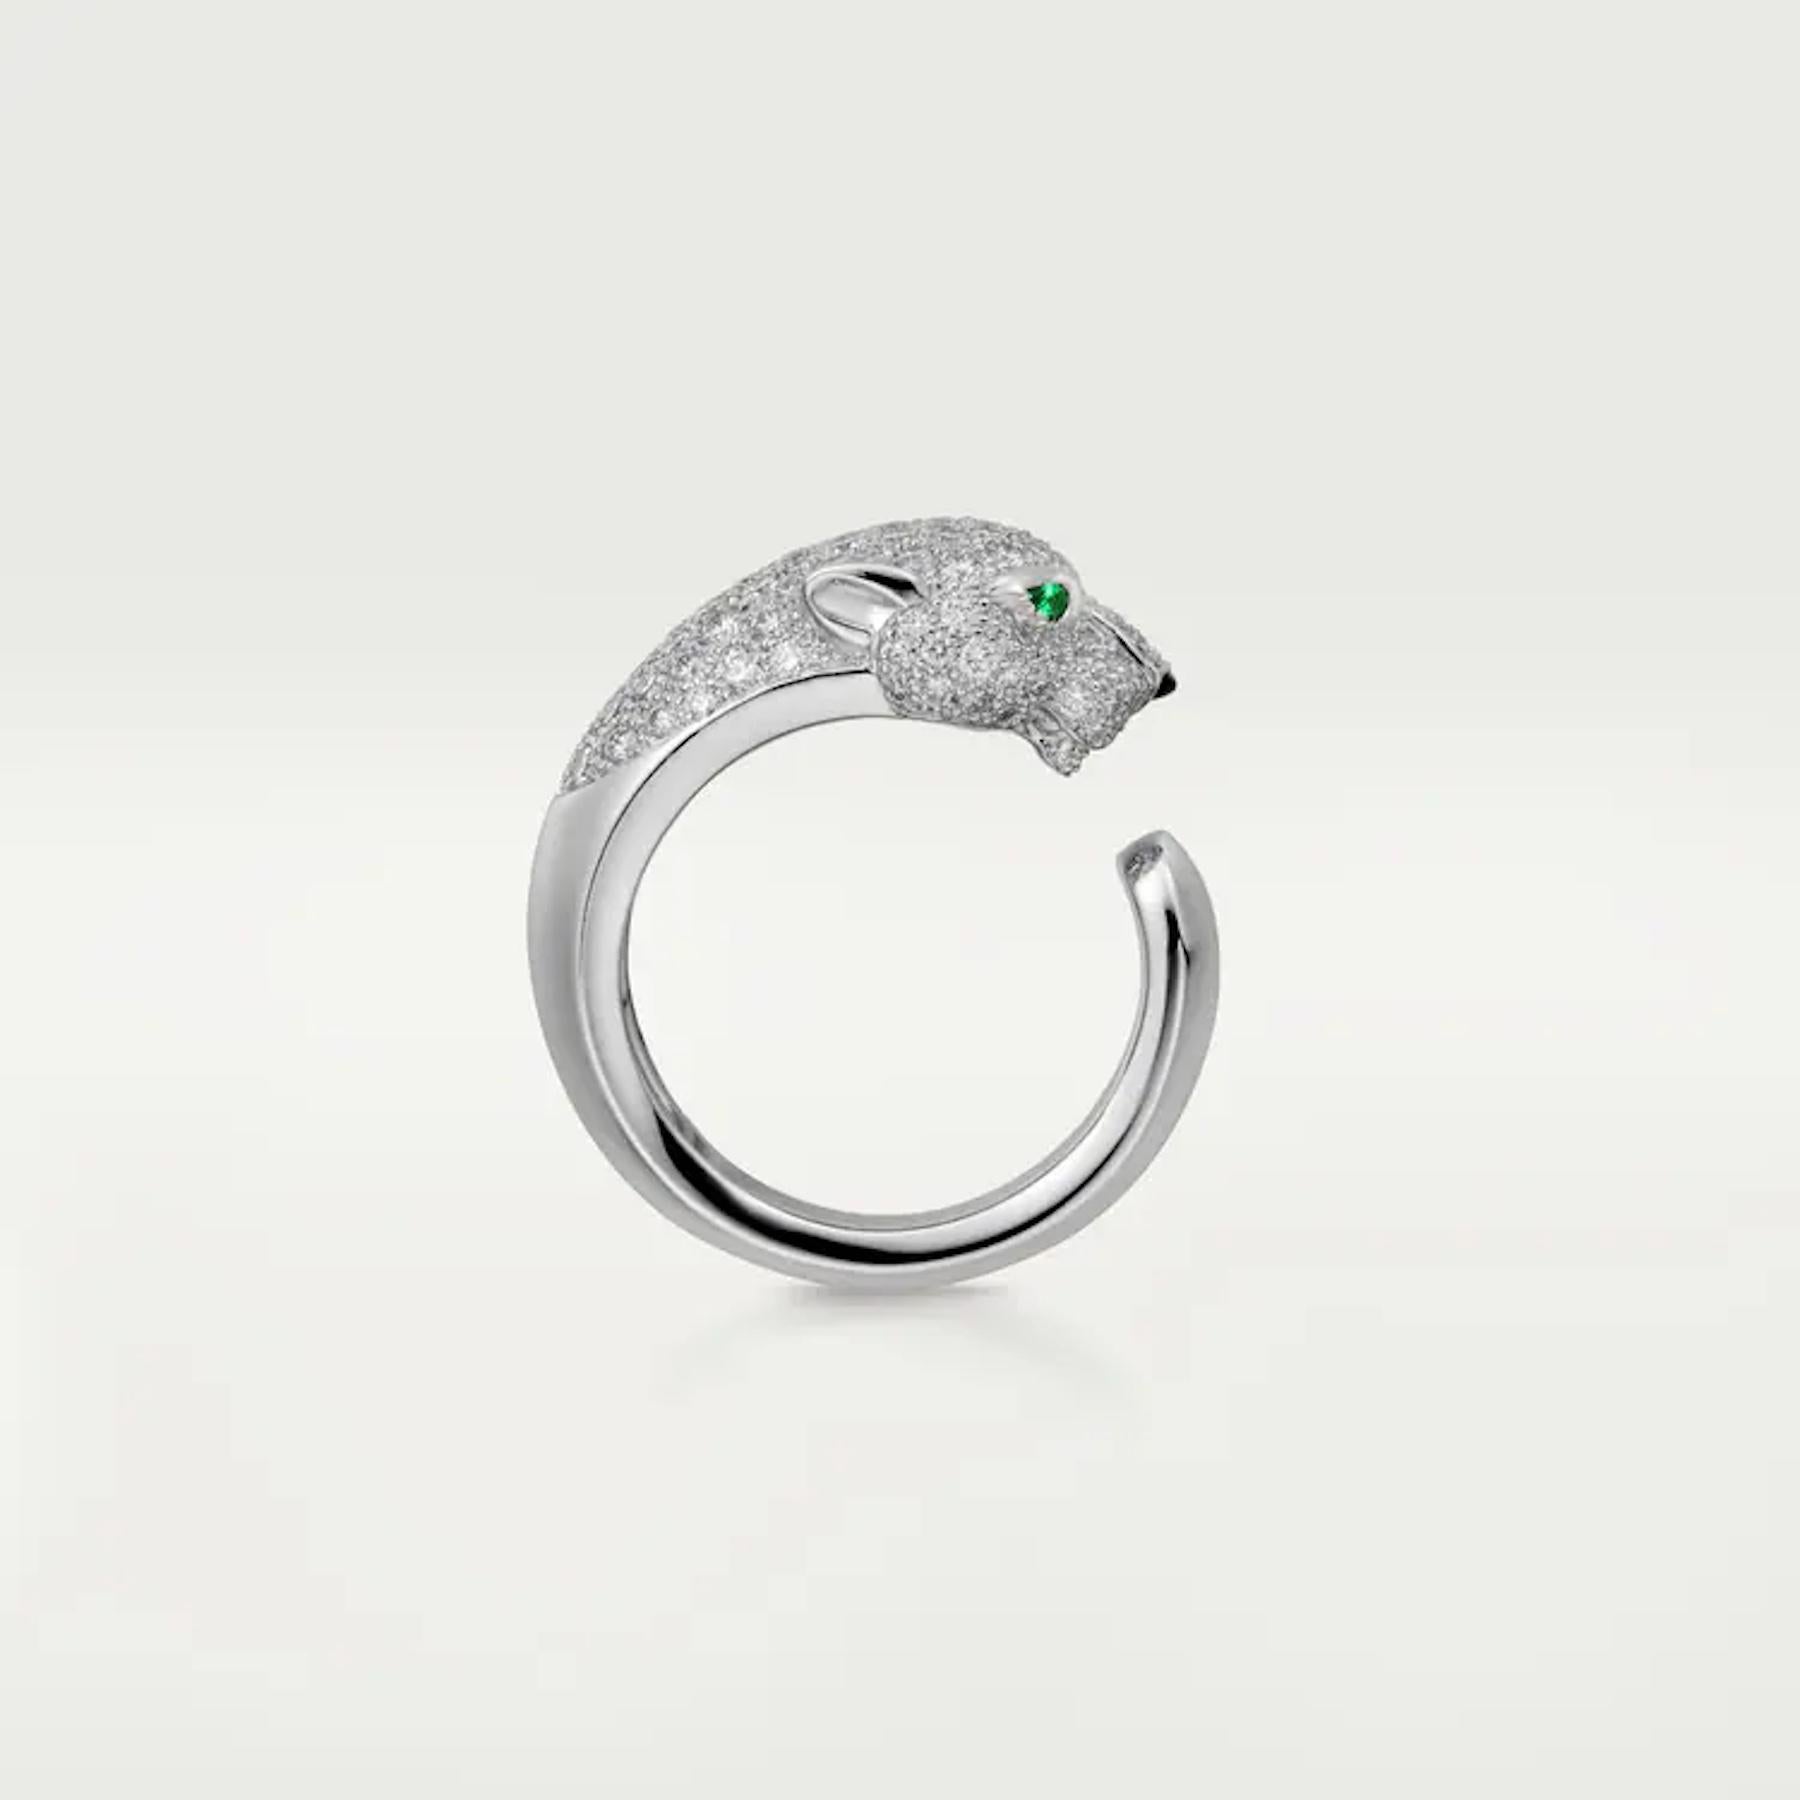 Contemporary Cartier Panthere De Cartier Ring 18k White Gold Diamonds Emeralds & Onyx